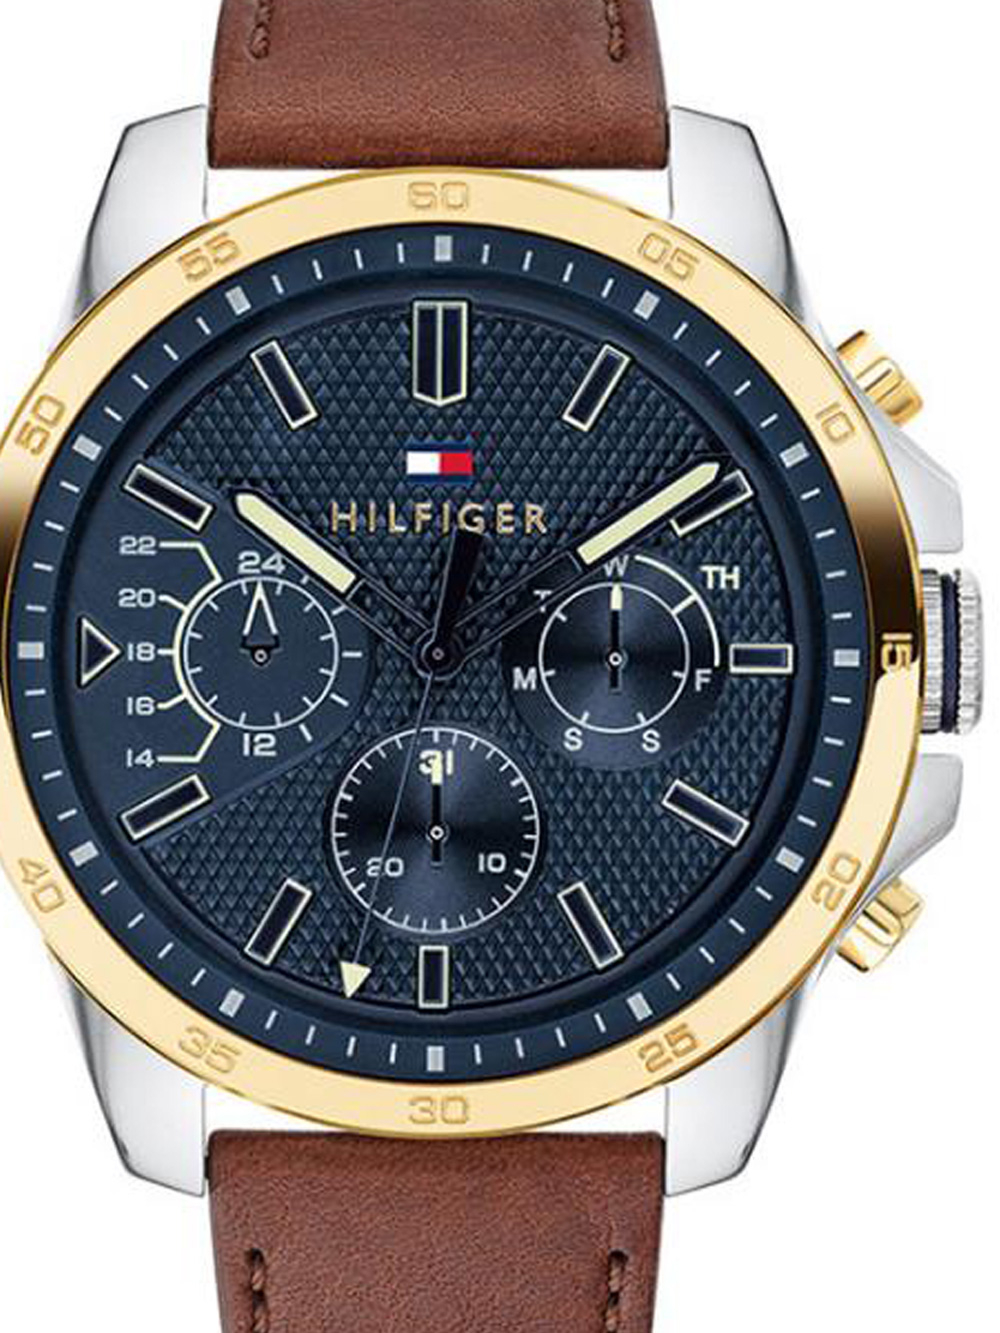 Tommy Hilfiger 1791561 watch cheap shopping: